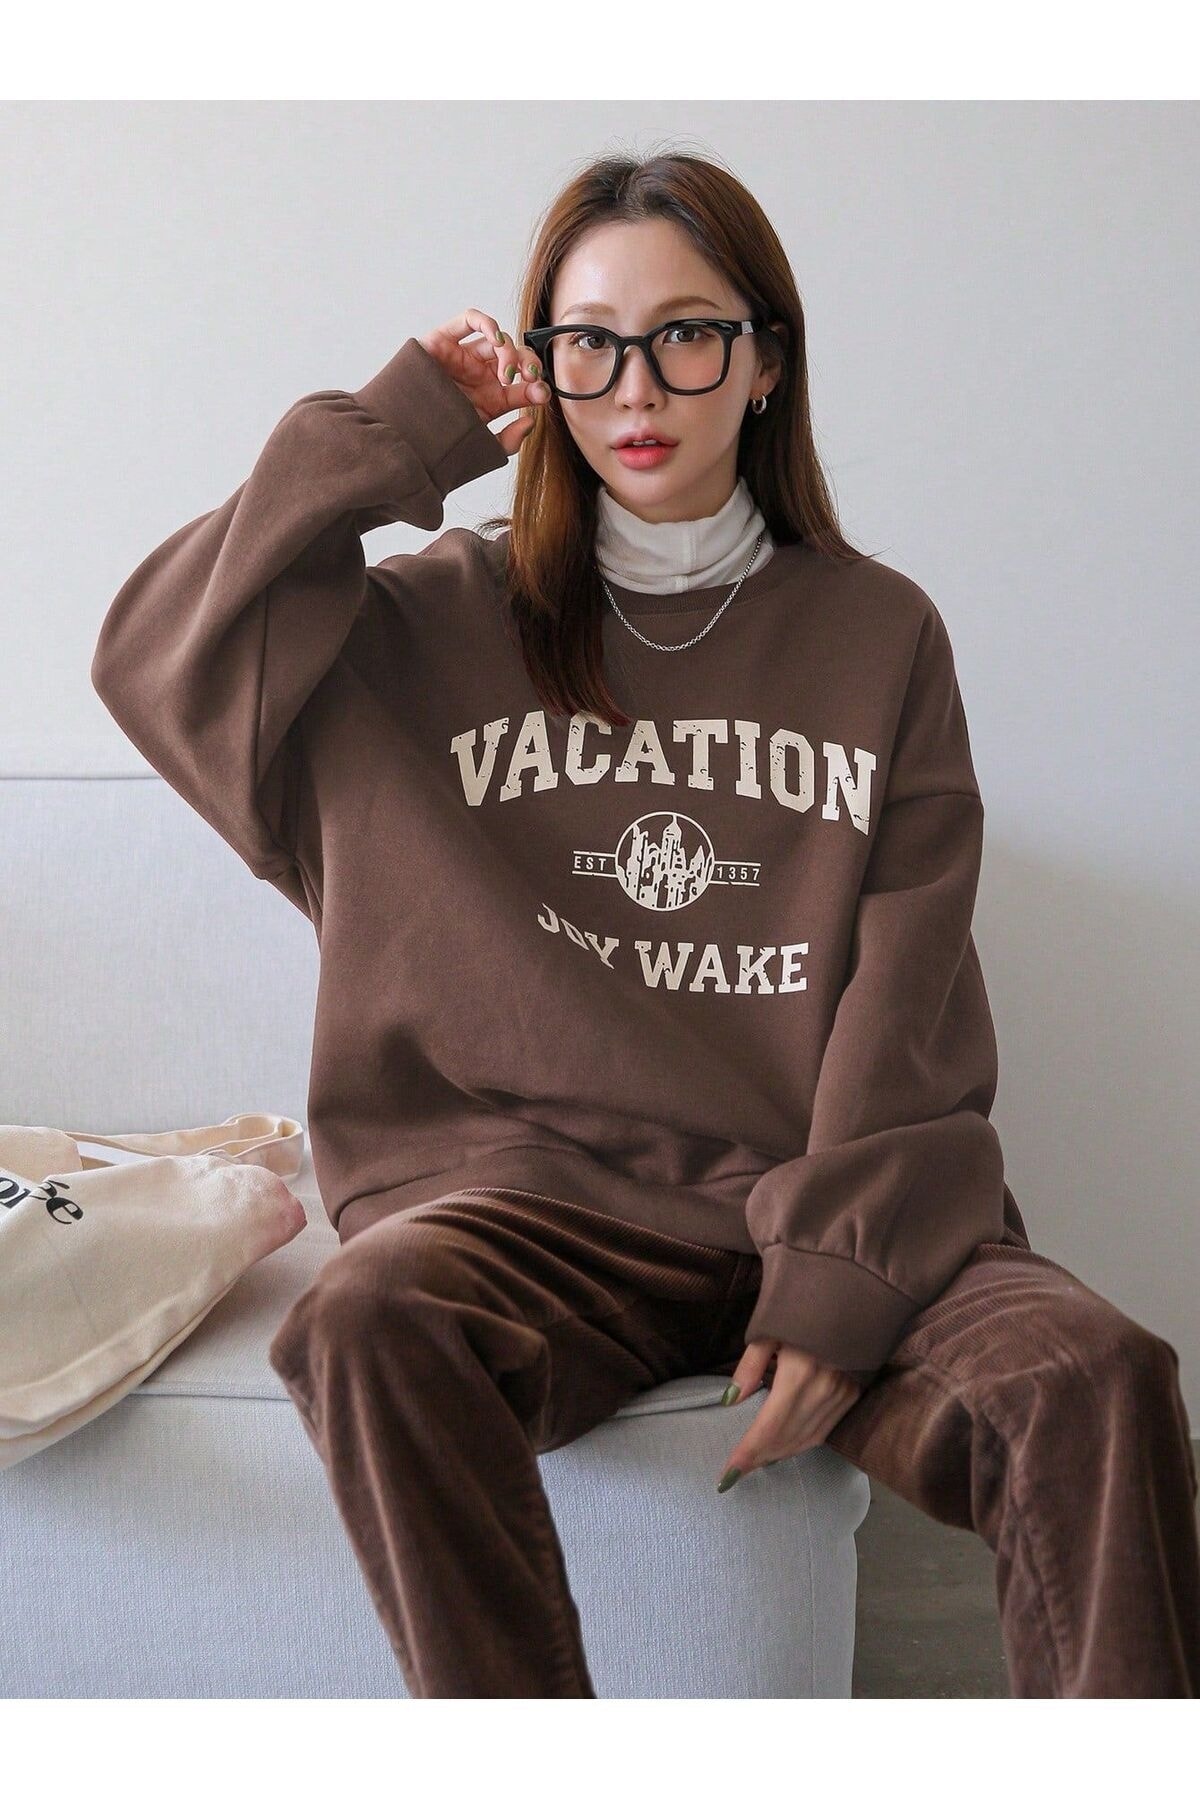 Know Women's Coffee Vacation Joy Wake Printed Oversized Crew Neck Sweatshirt.